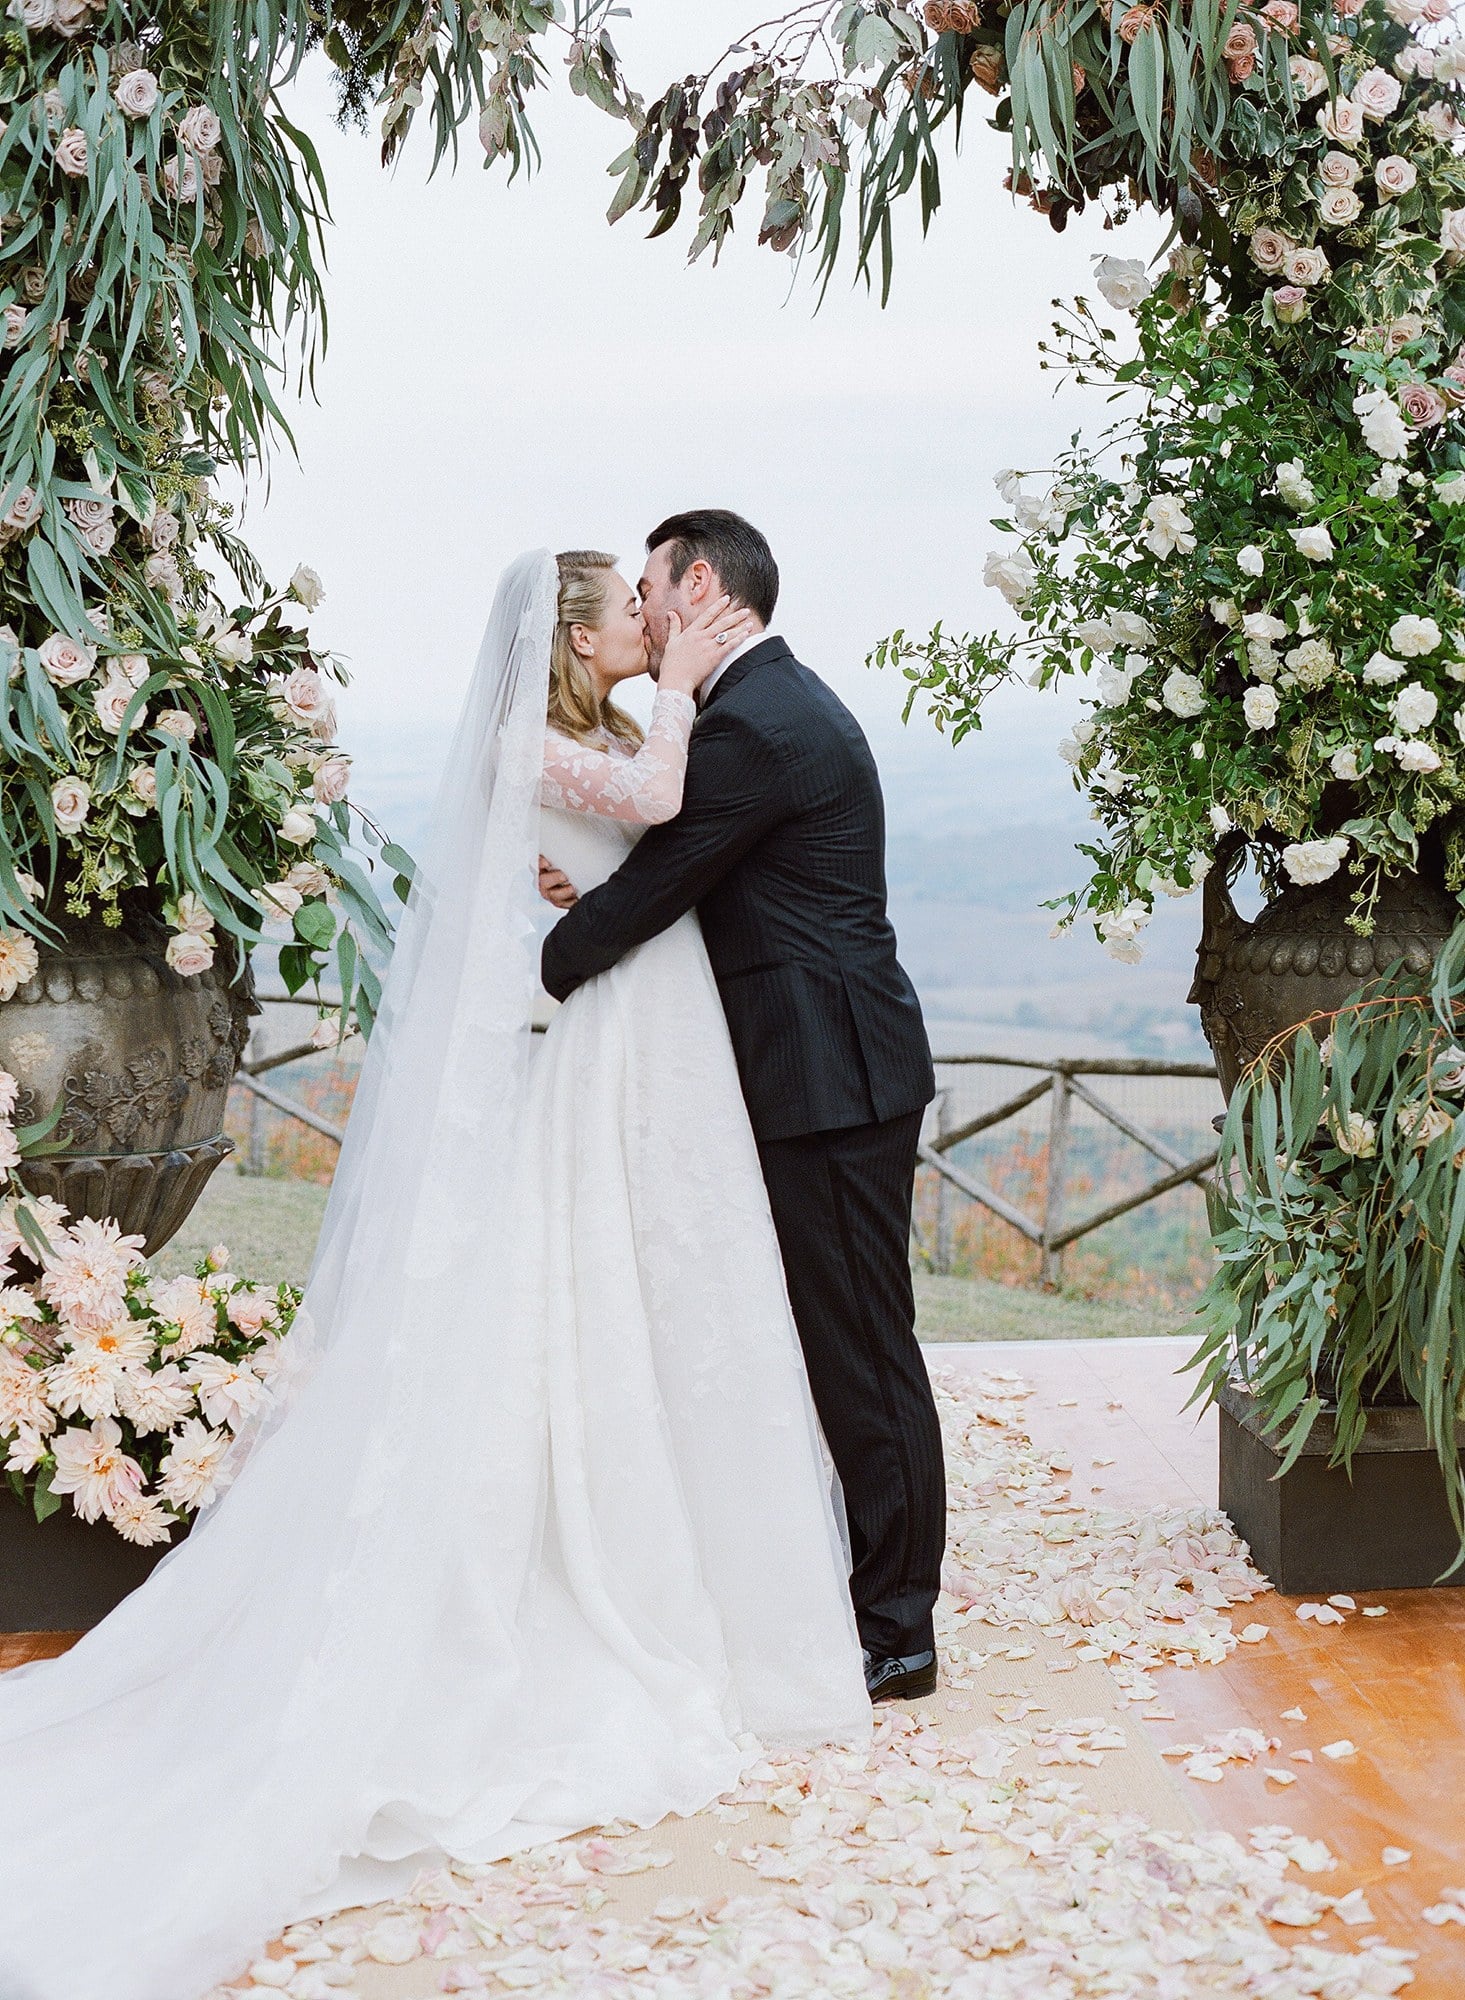 Everything We Know About Kate Upton & Justin Verlander's Wedding